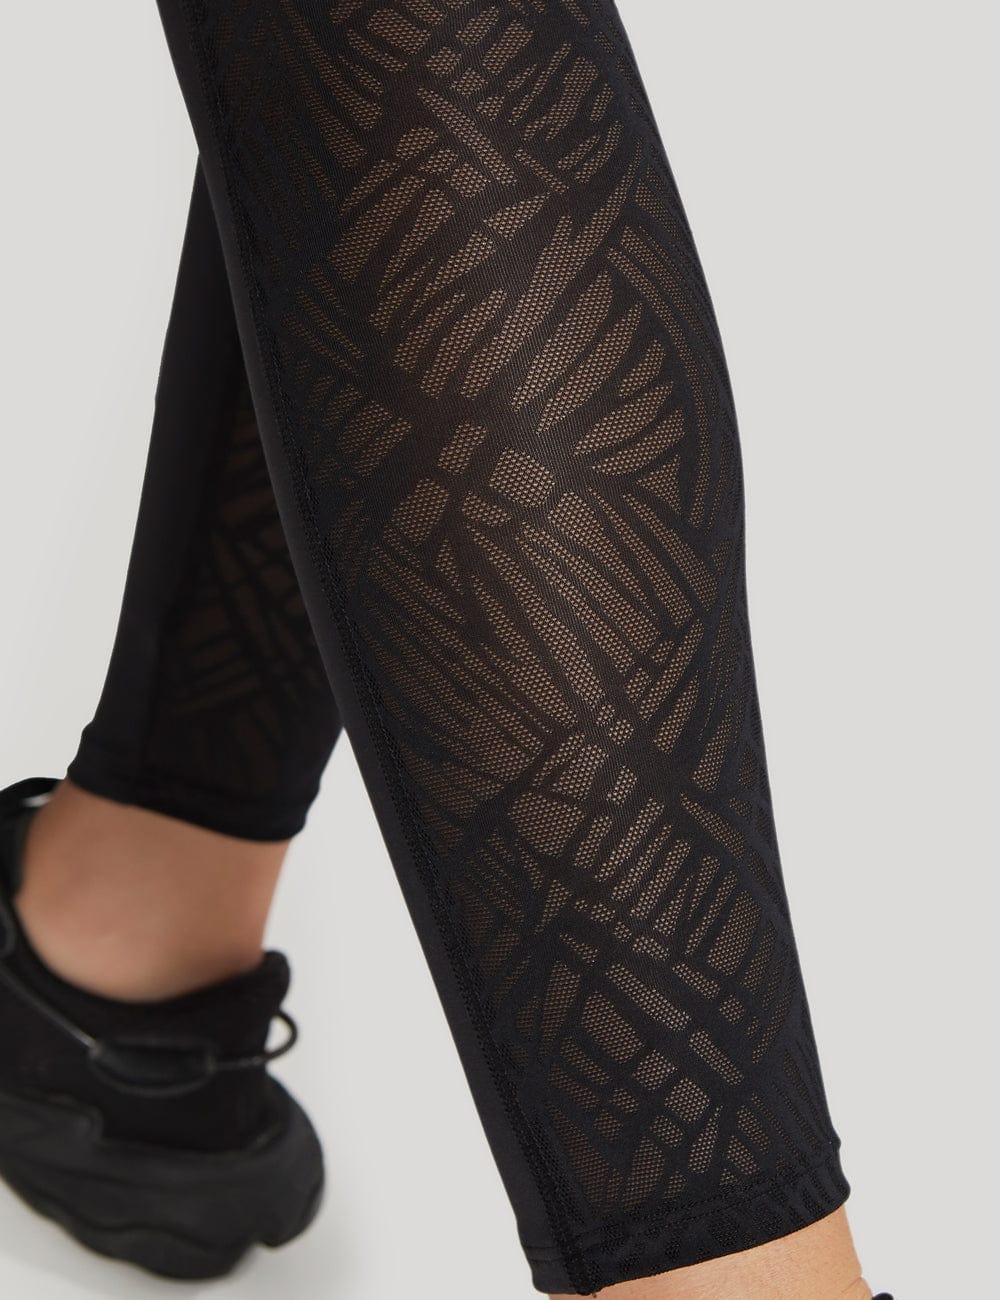 Discover 150+ lululemon black cut out leggings